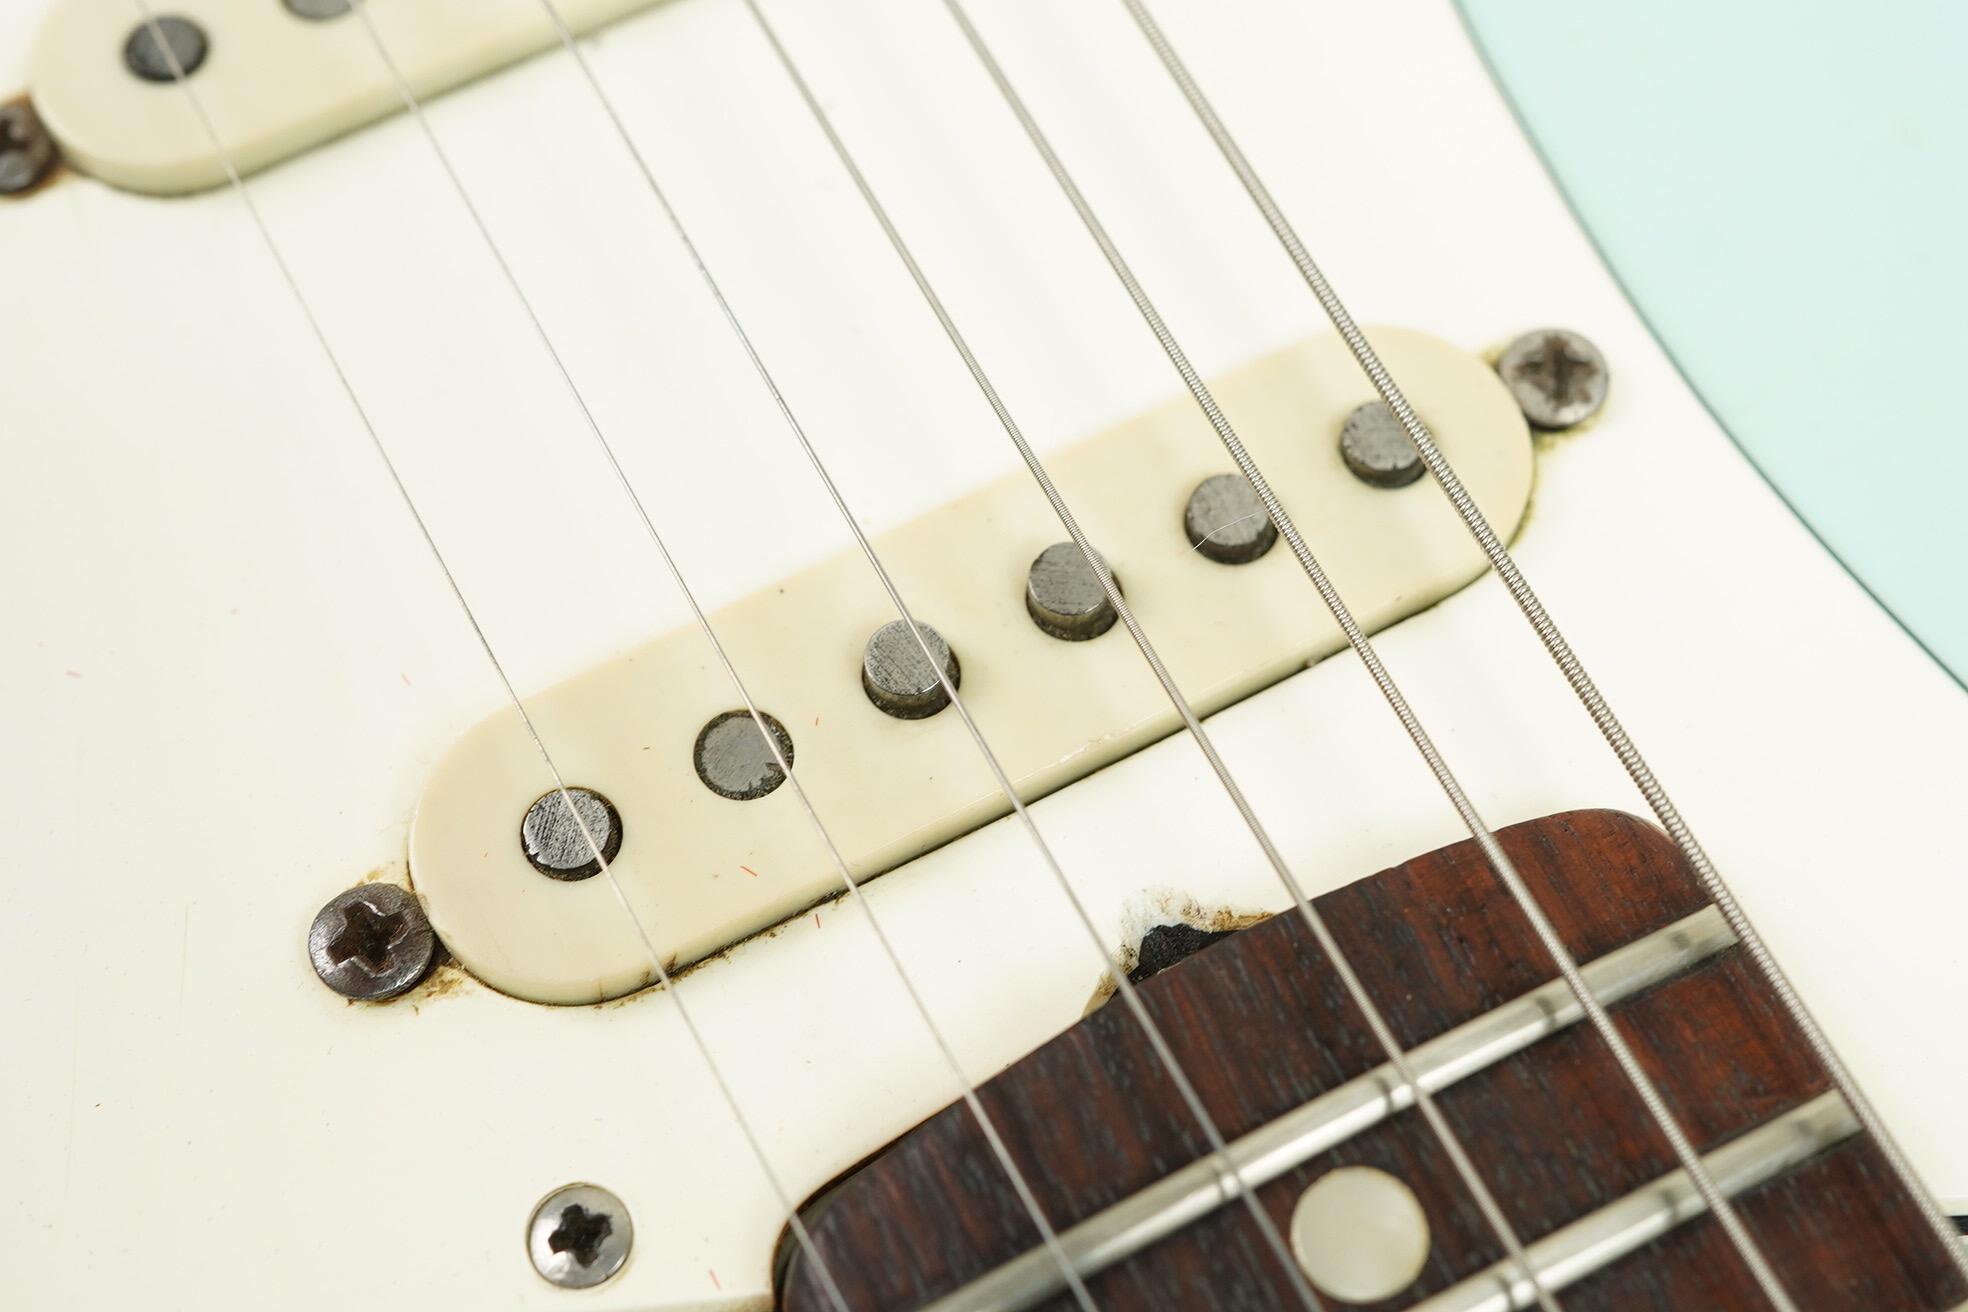 1970 Fender Stratocaster Daphne blue Clive Brown refin